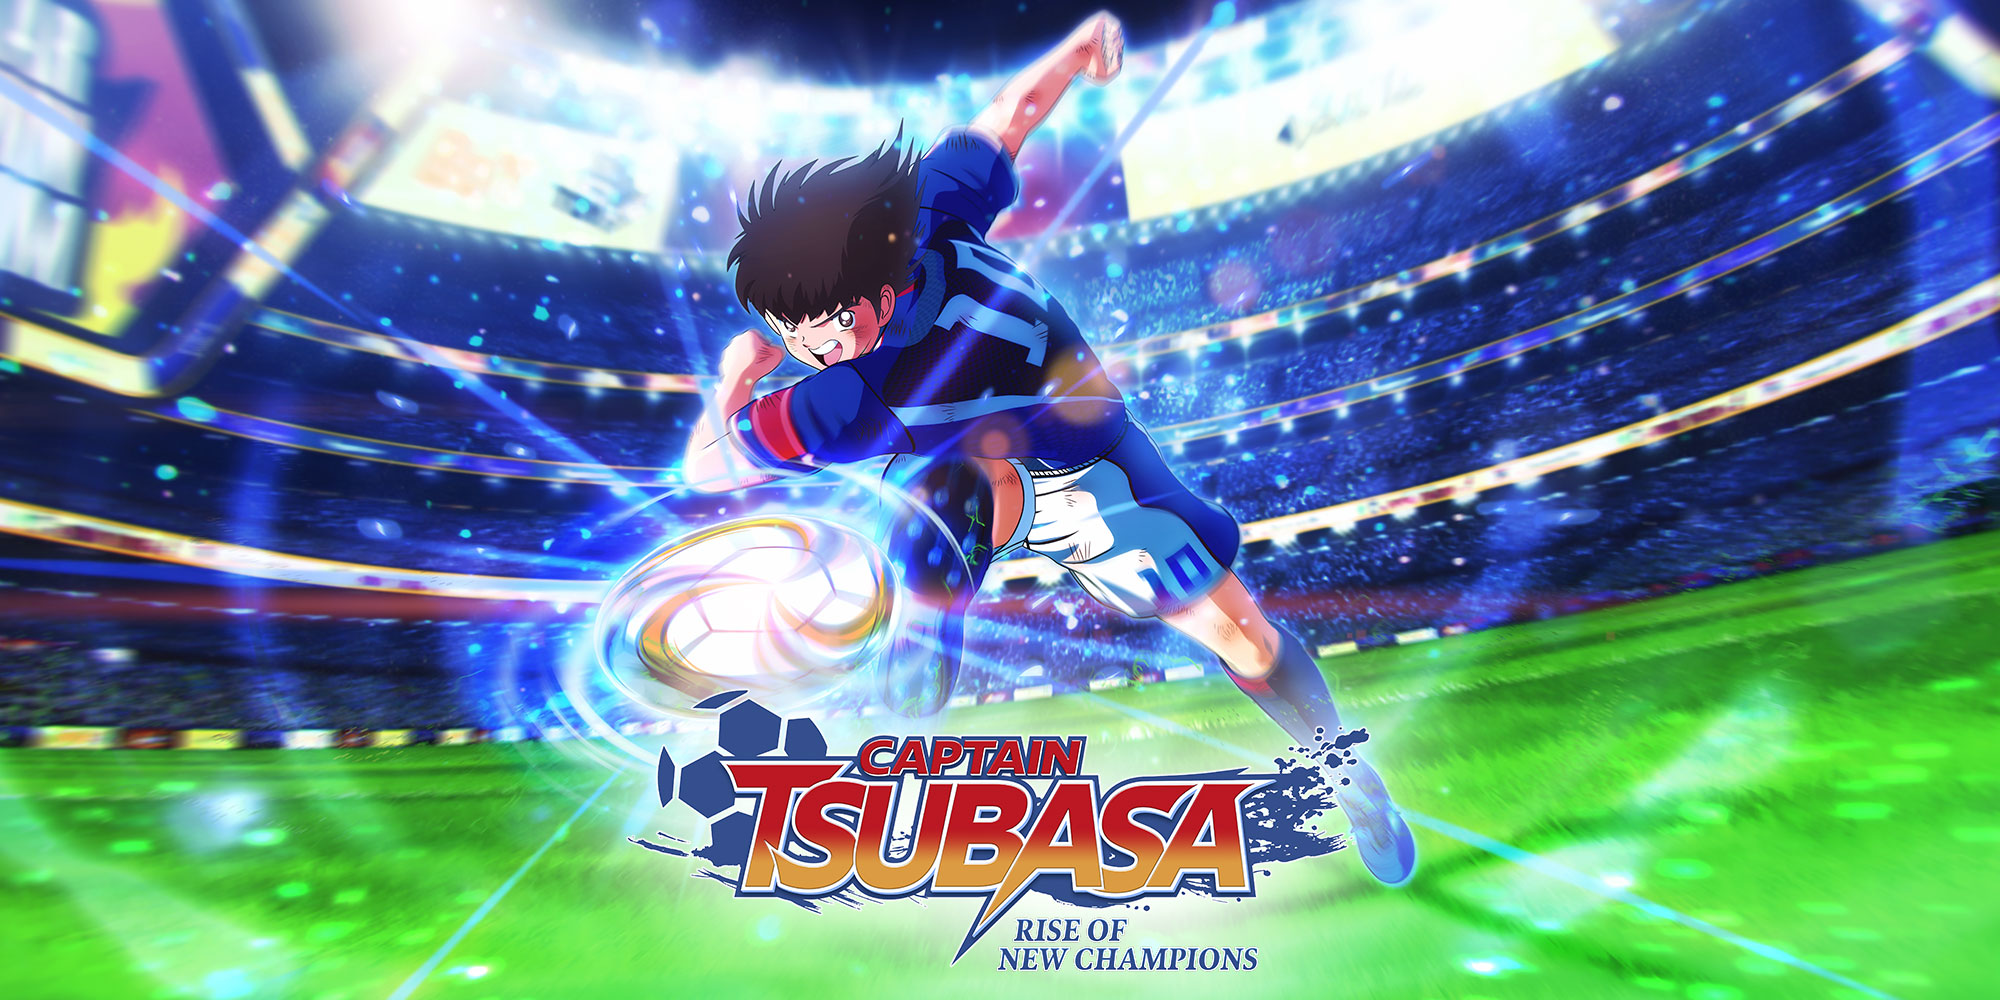 tsubasa switch release